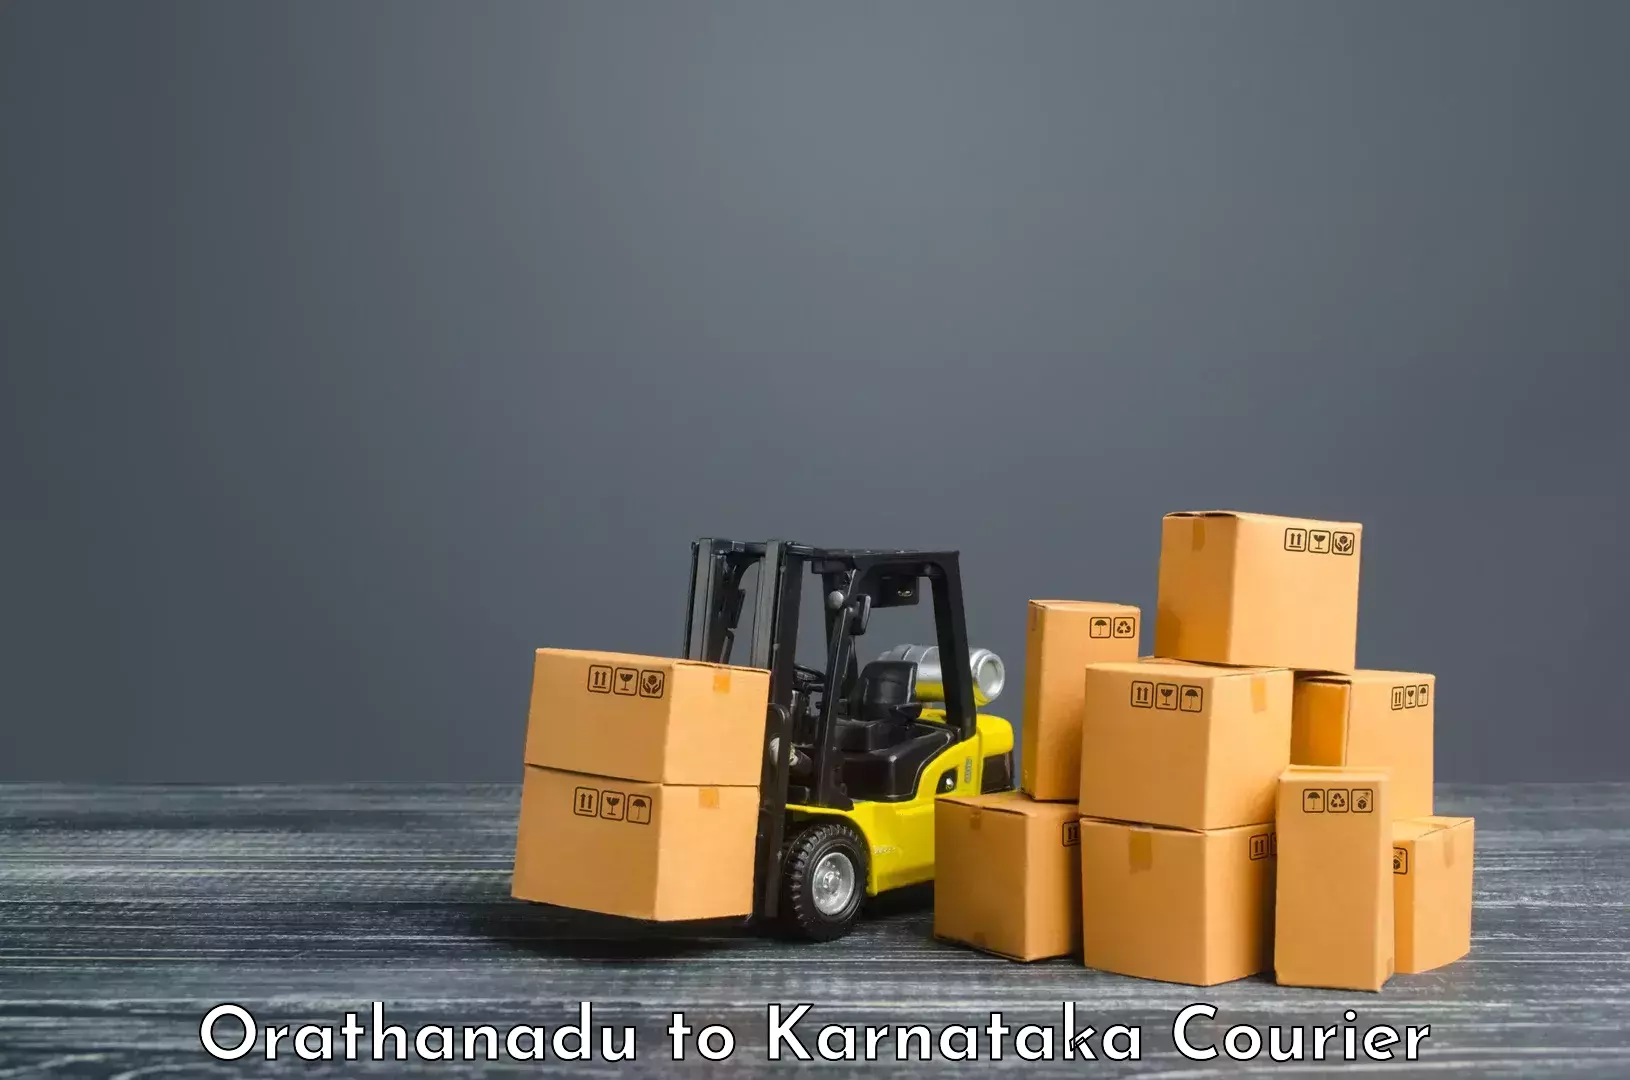 User-friendly delivery service Orathanadu to Karnataka